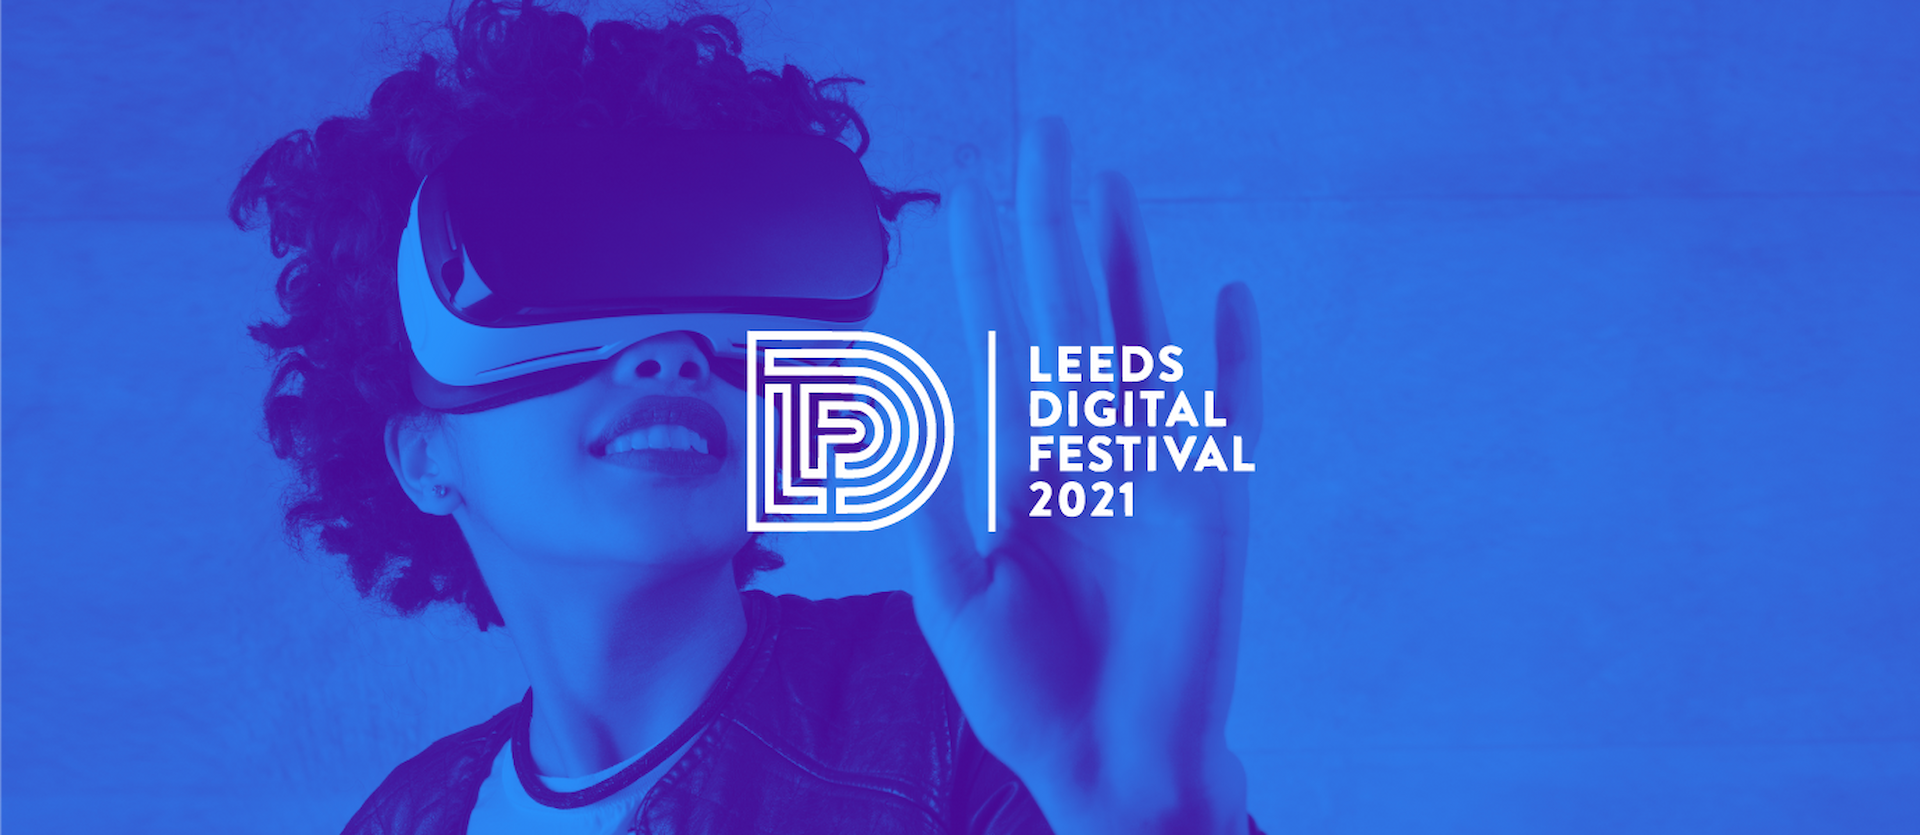 AND is sponsoring Leeds Digital Festival 2021 (1)